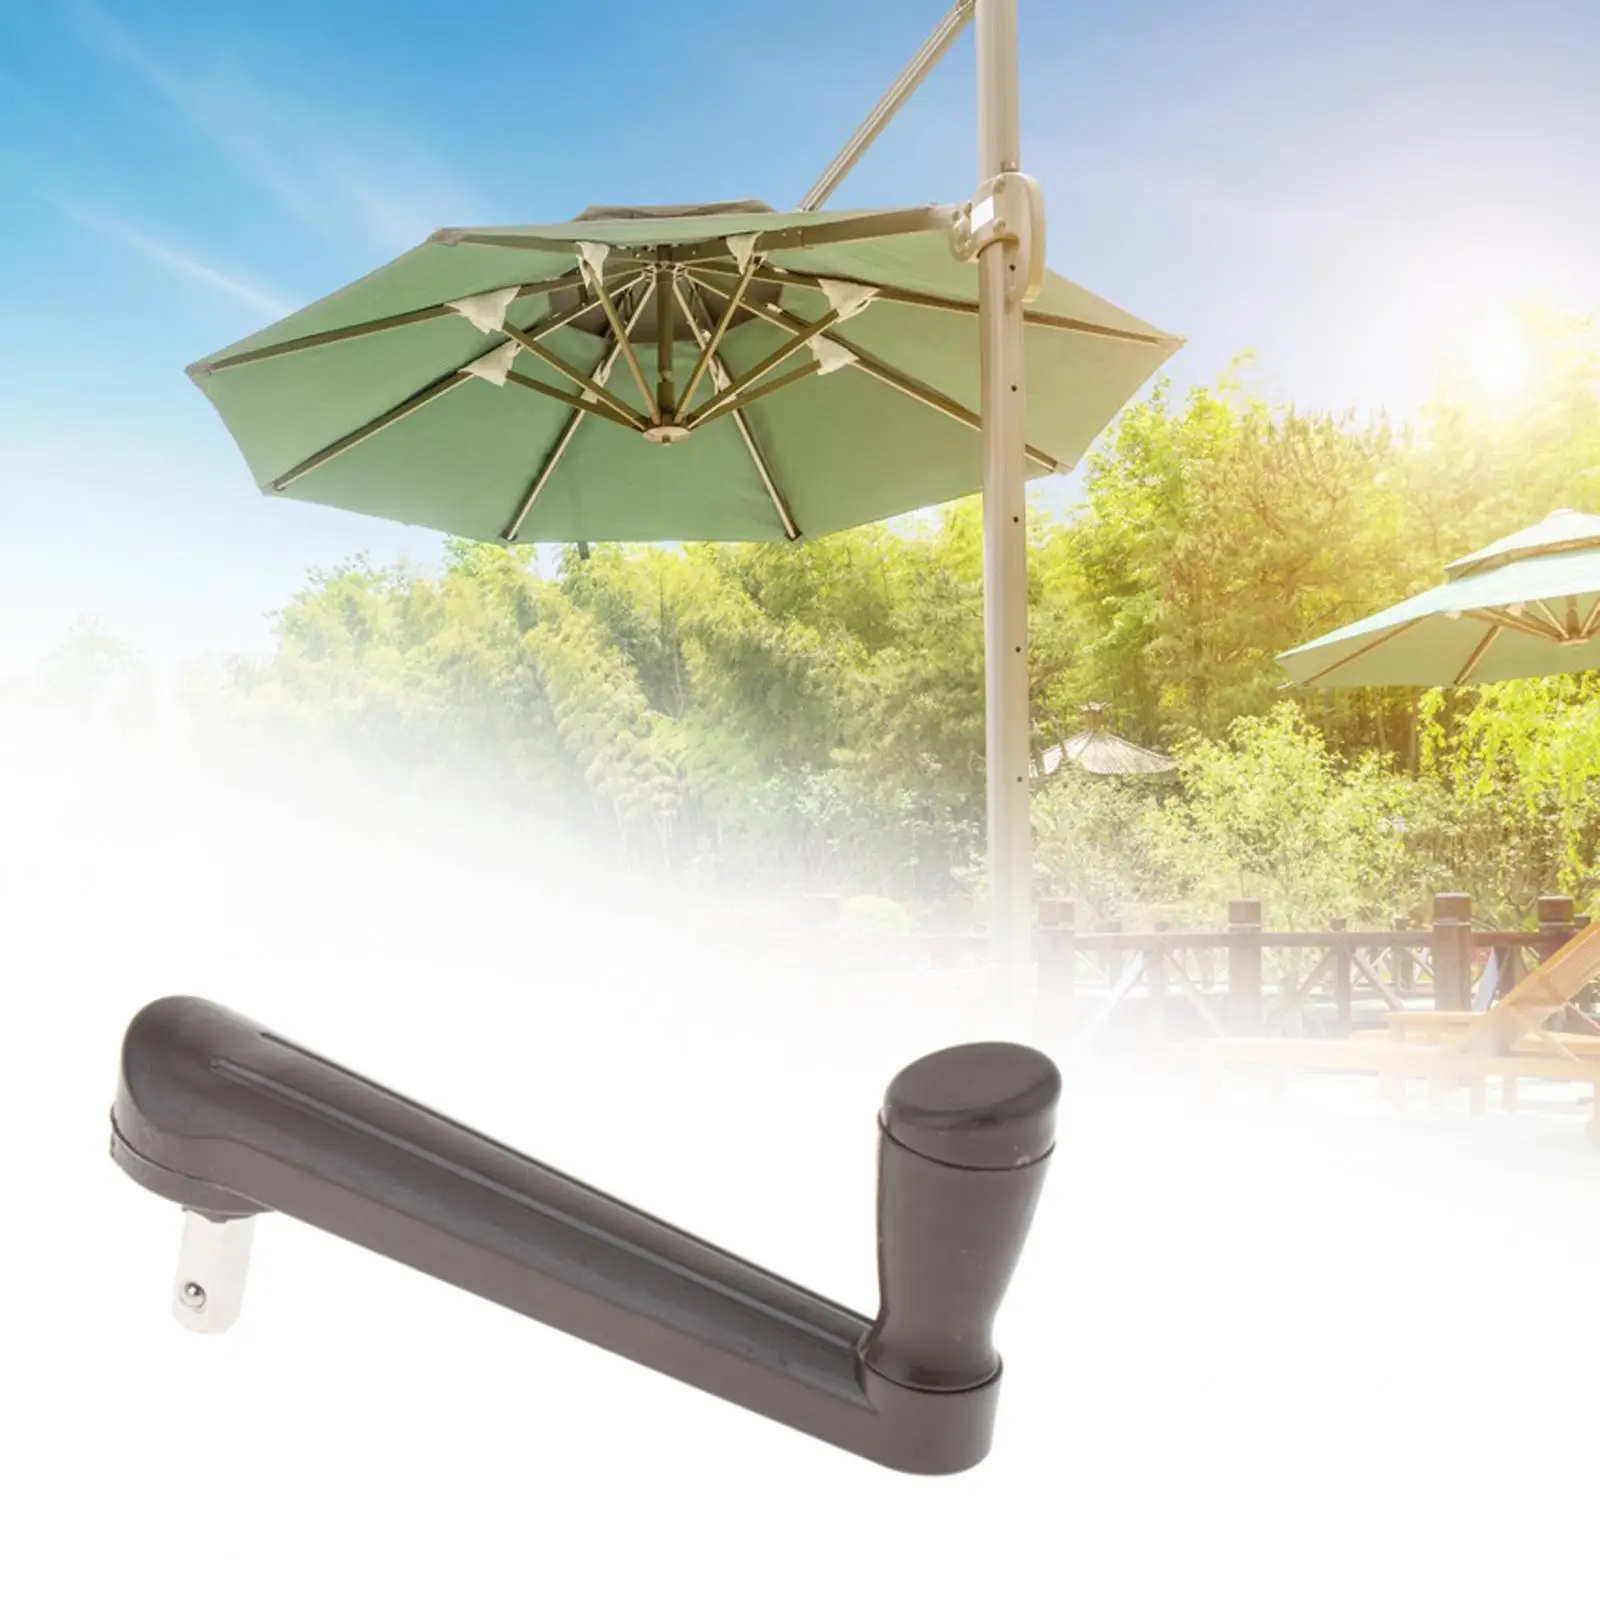 Parasol Accessories Parasol Accessories Replace Crank Handle Leisure Support